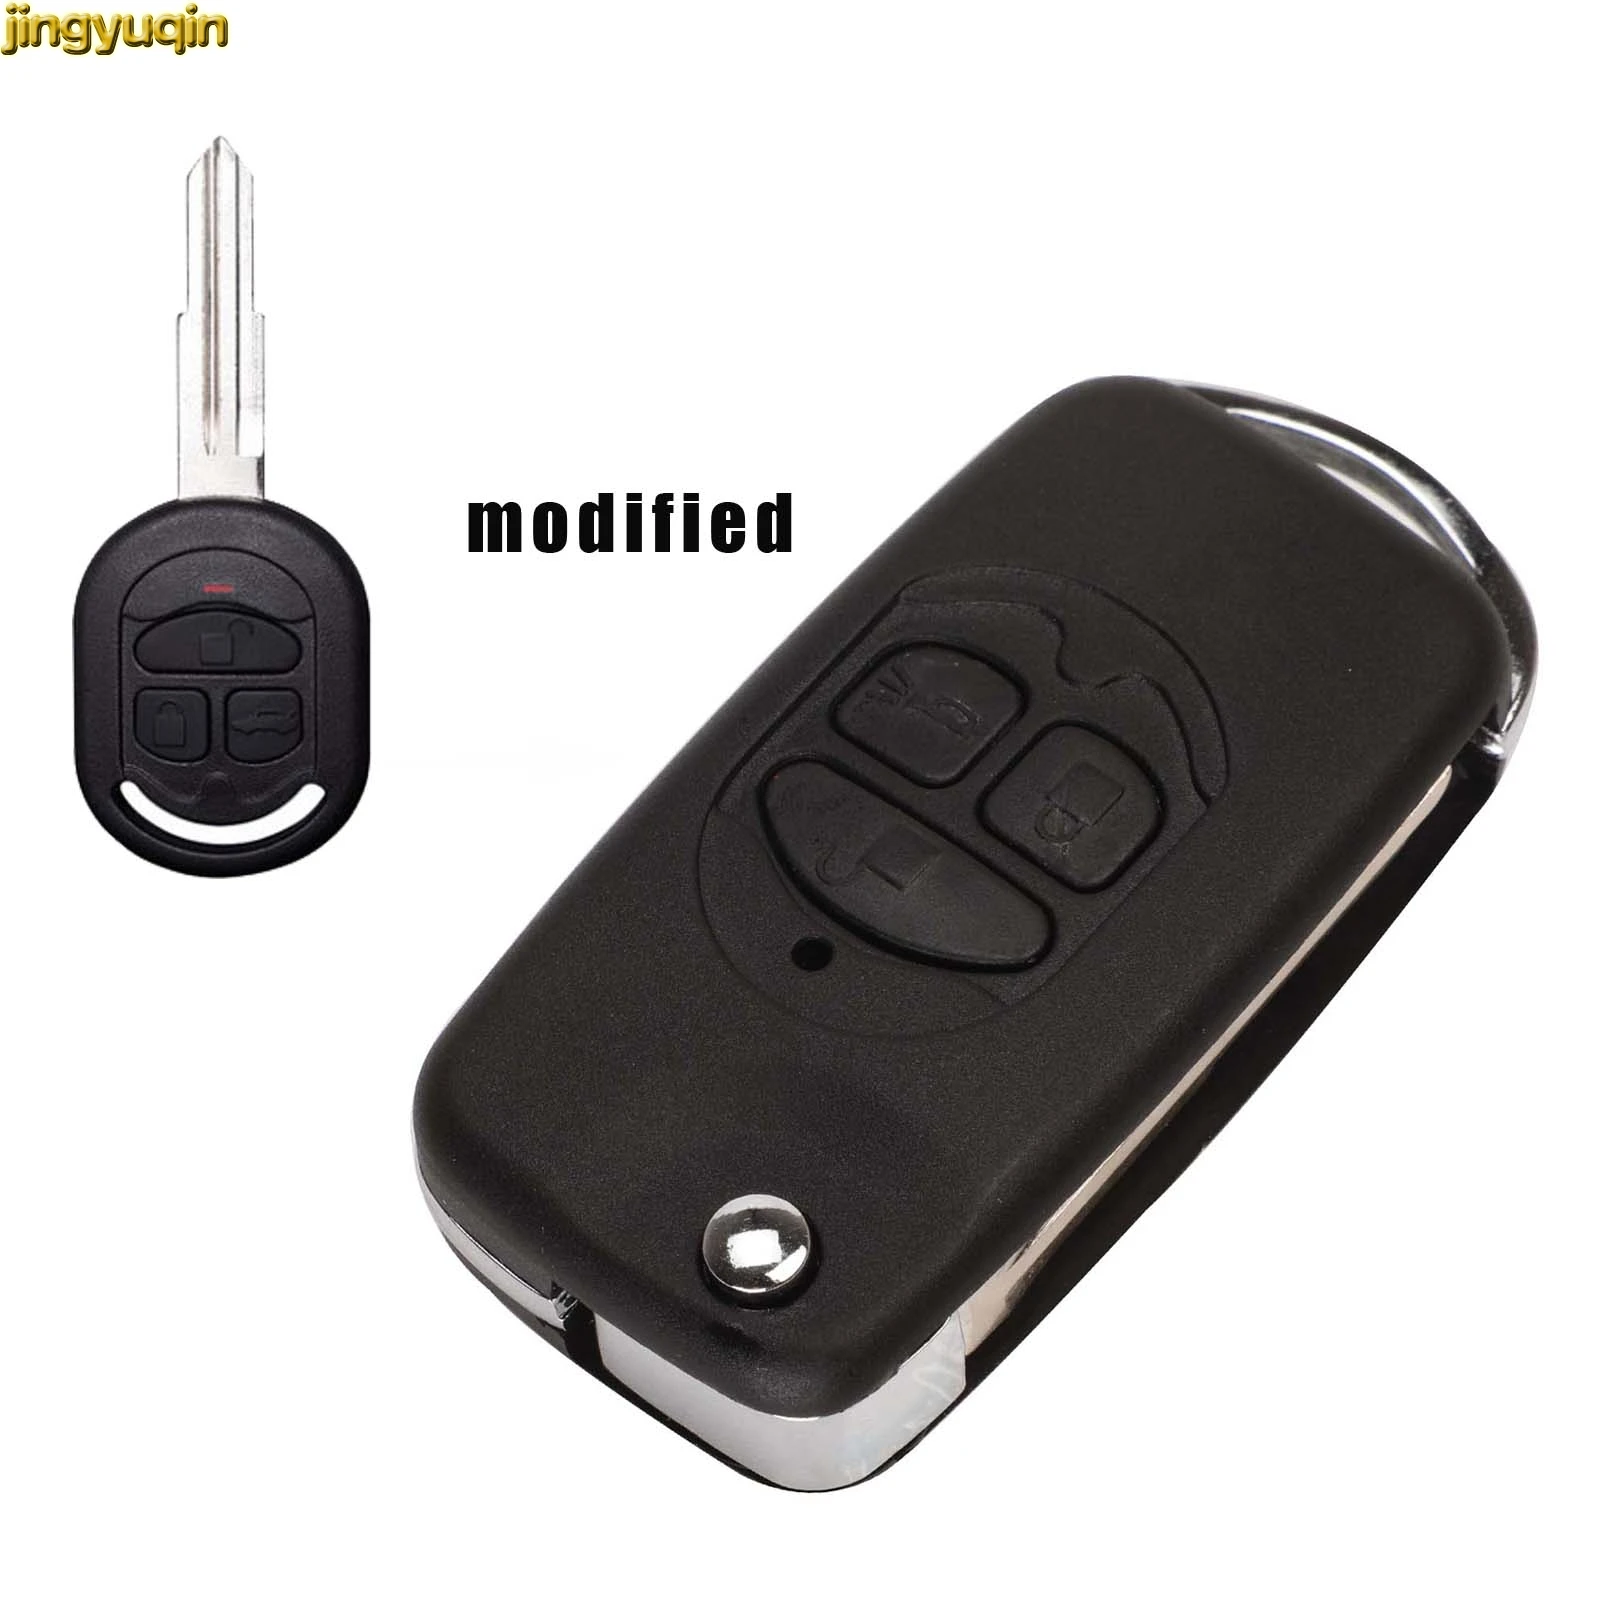 Jingyuqin Modified Flip Remote Car Key Shell for Chevrolet Lacetti Optra Nubira Vehicle Pocket Alarm 2005 2006 2007 2008 2009